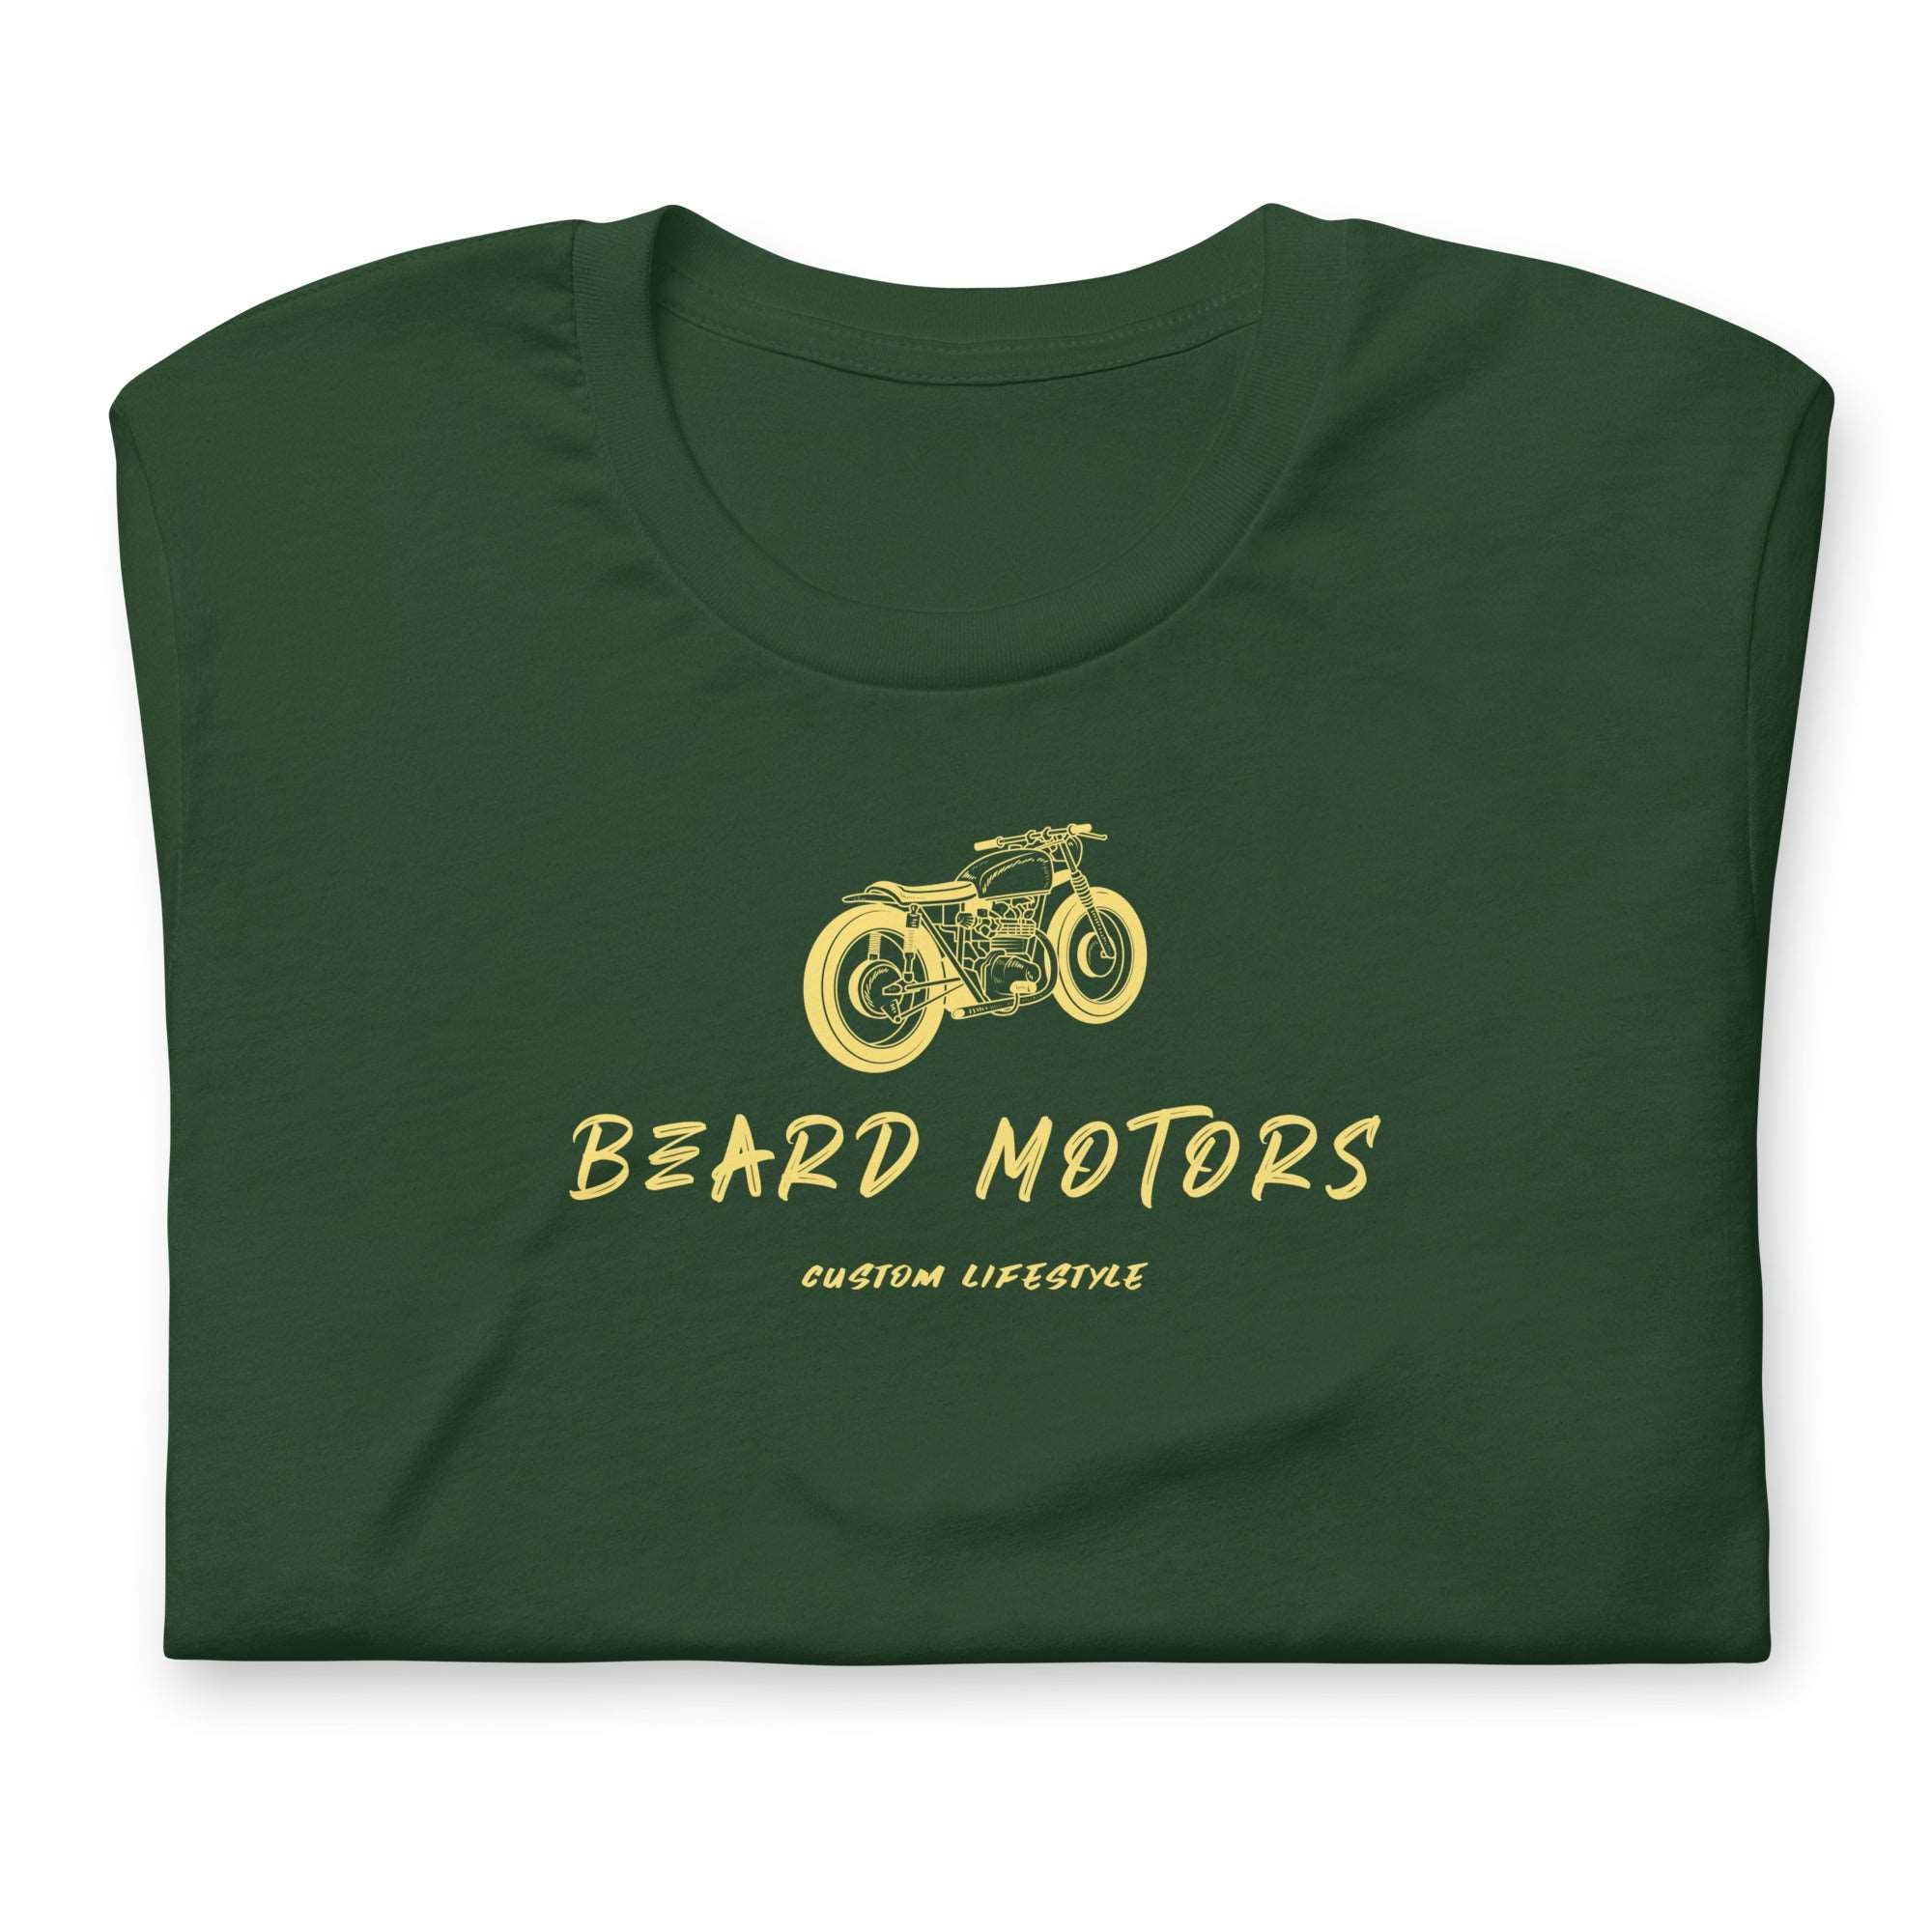 Beard Motors T-Shirt Motorcycle Brat Custom Lifestyle Forest Green - Beard Motors